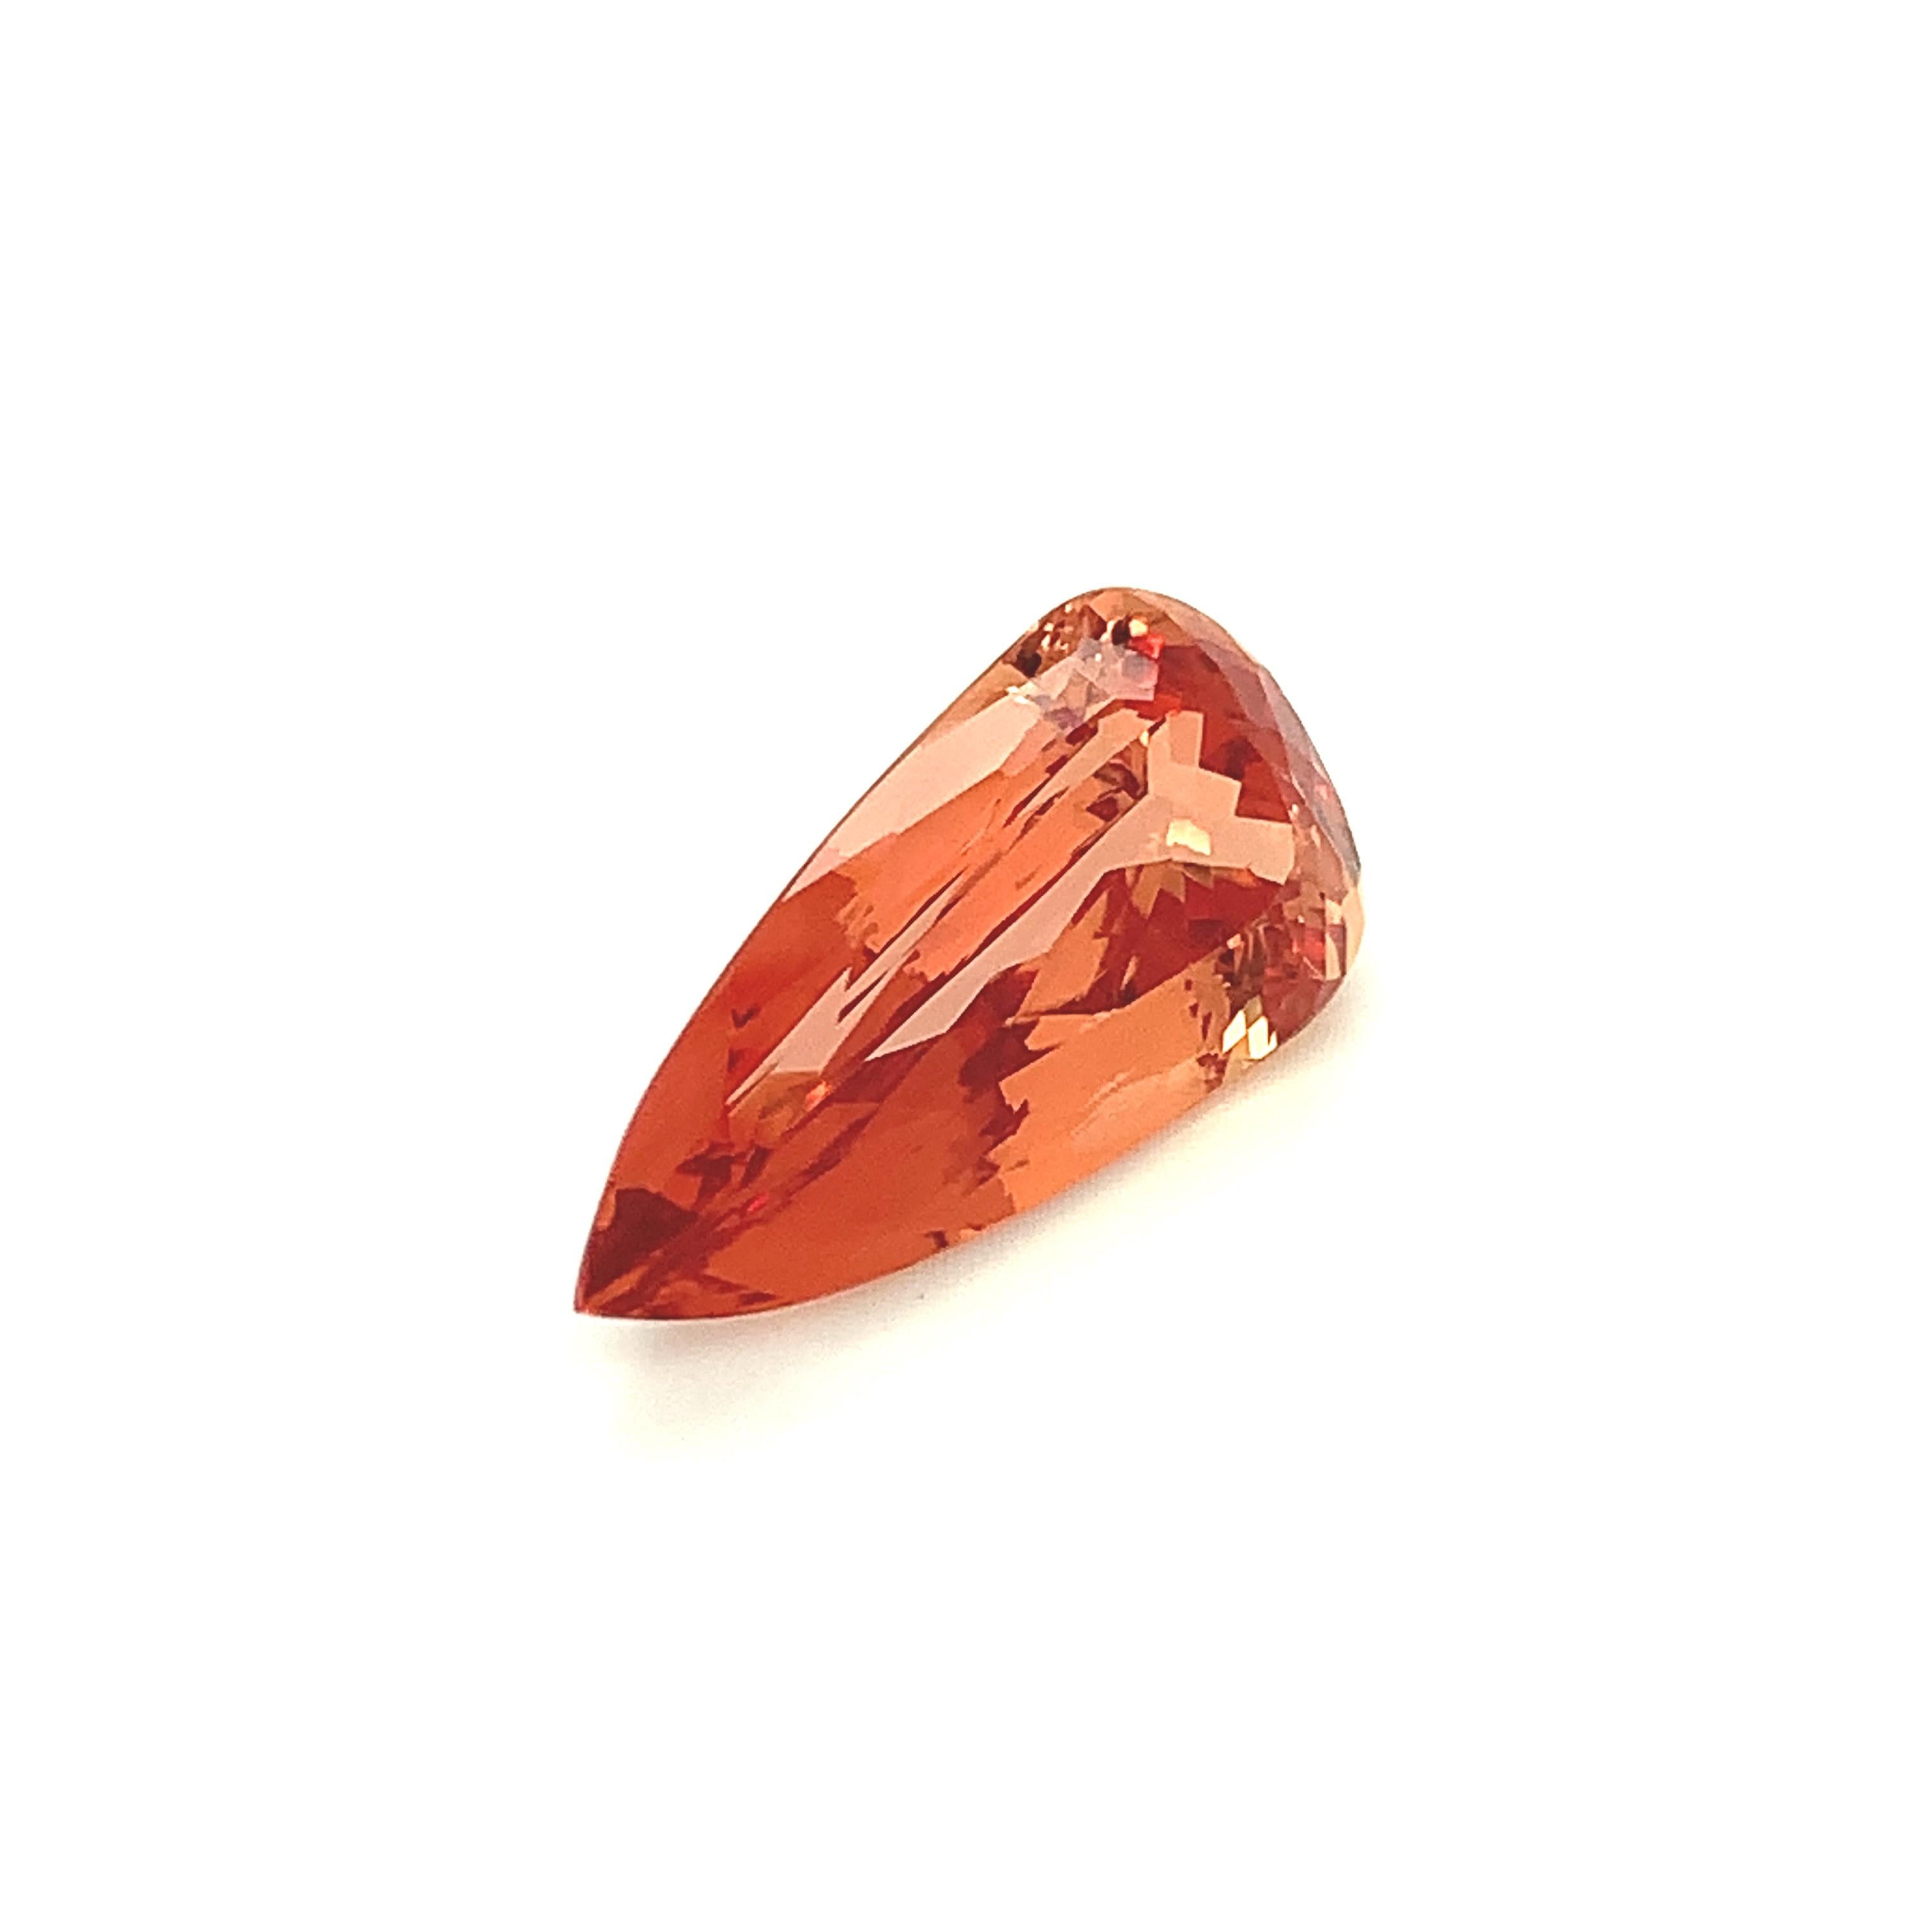 Topaze impériale orange 15,90 carats, pierre précieuse non sertie, certifiée GIA en vente 4